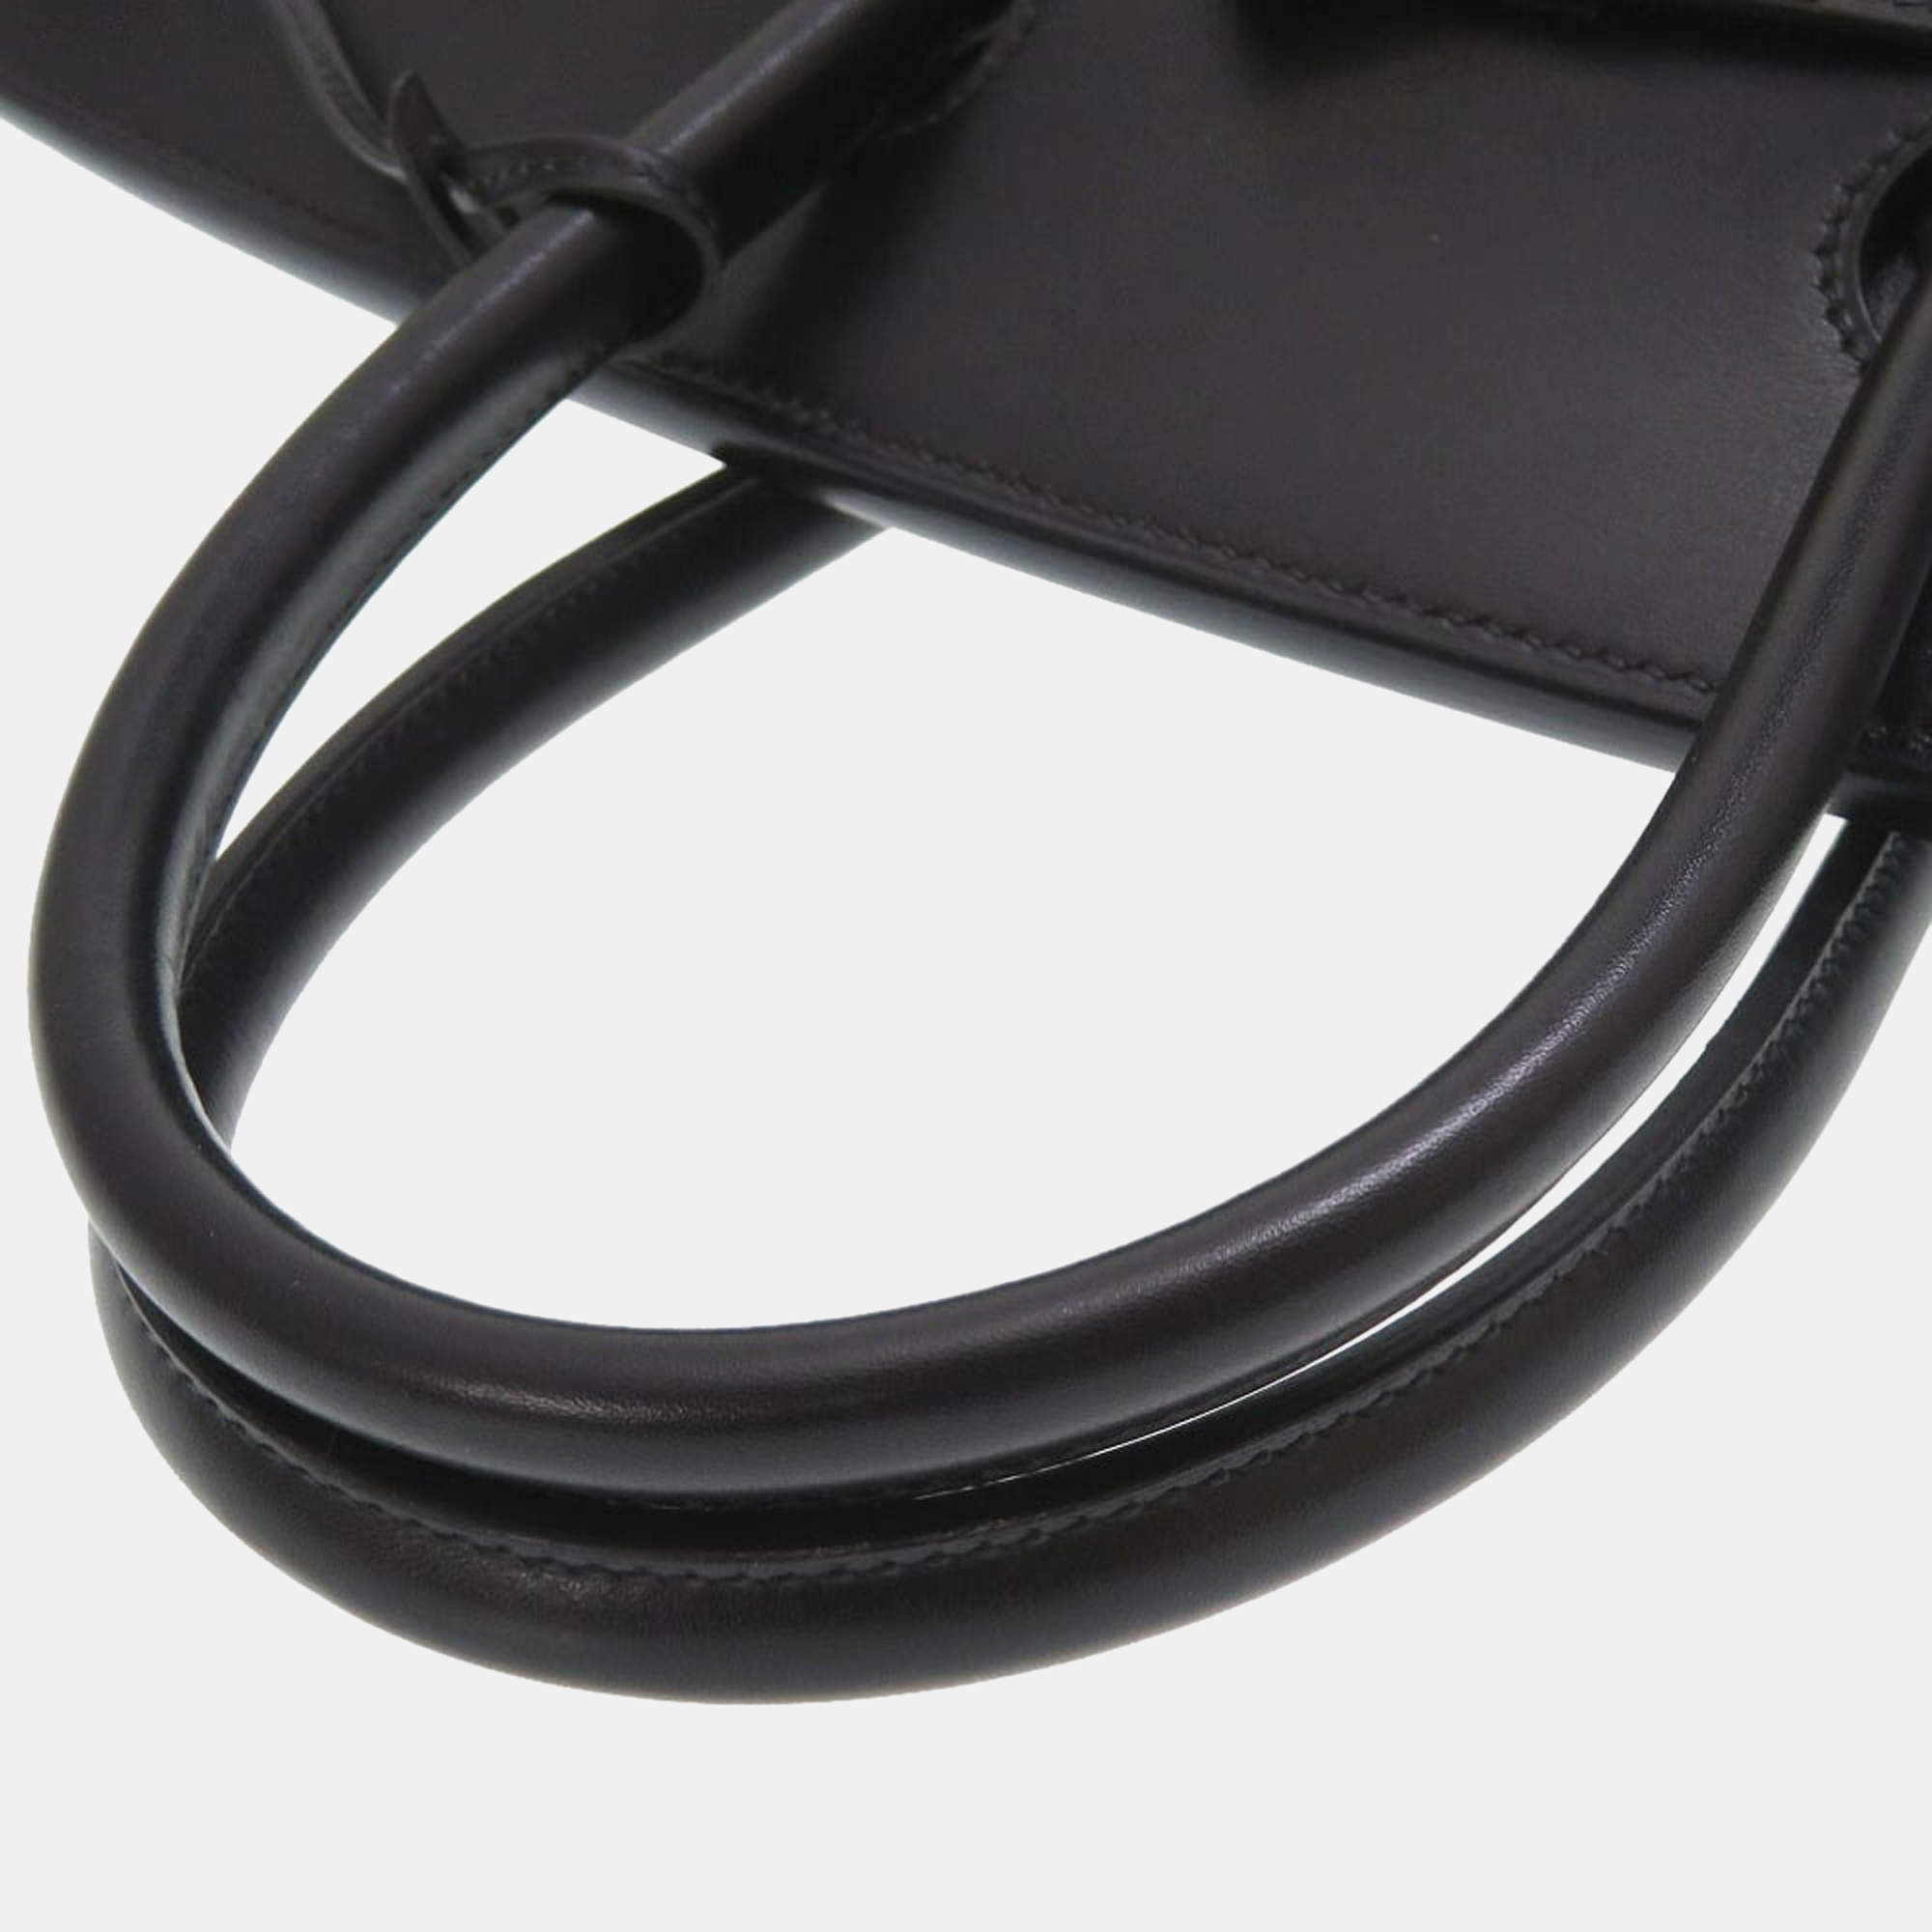 Hermes Birkin 35 box calf black □F stamped handbag 0